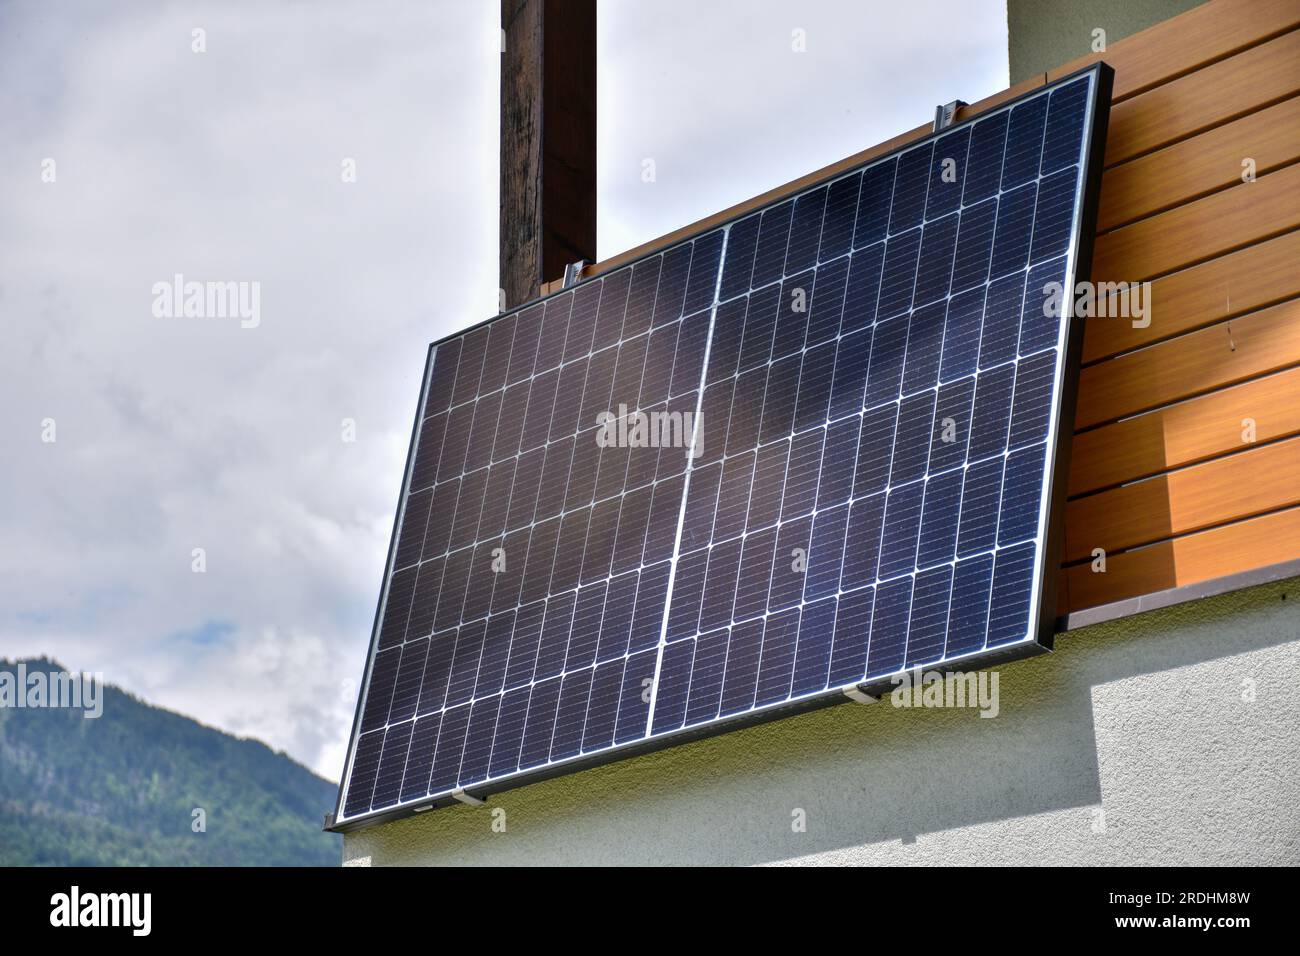 Balkonkraftwerk, Photovoltaik, Solarstrom, Solaranlage, Mini-Solaranlage, Panel, Solar, Solarenergie, Sonnenenergie, unabhängig, Strom, Solarzelle, Pa Stock Photo